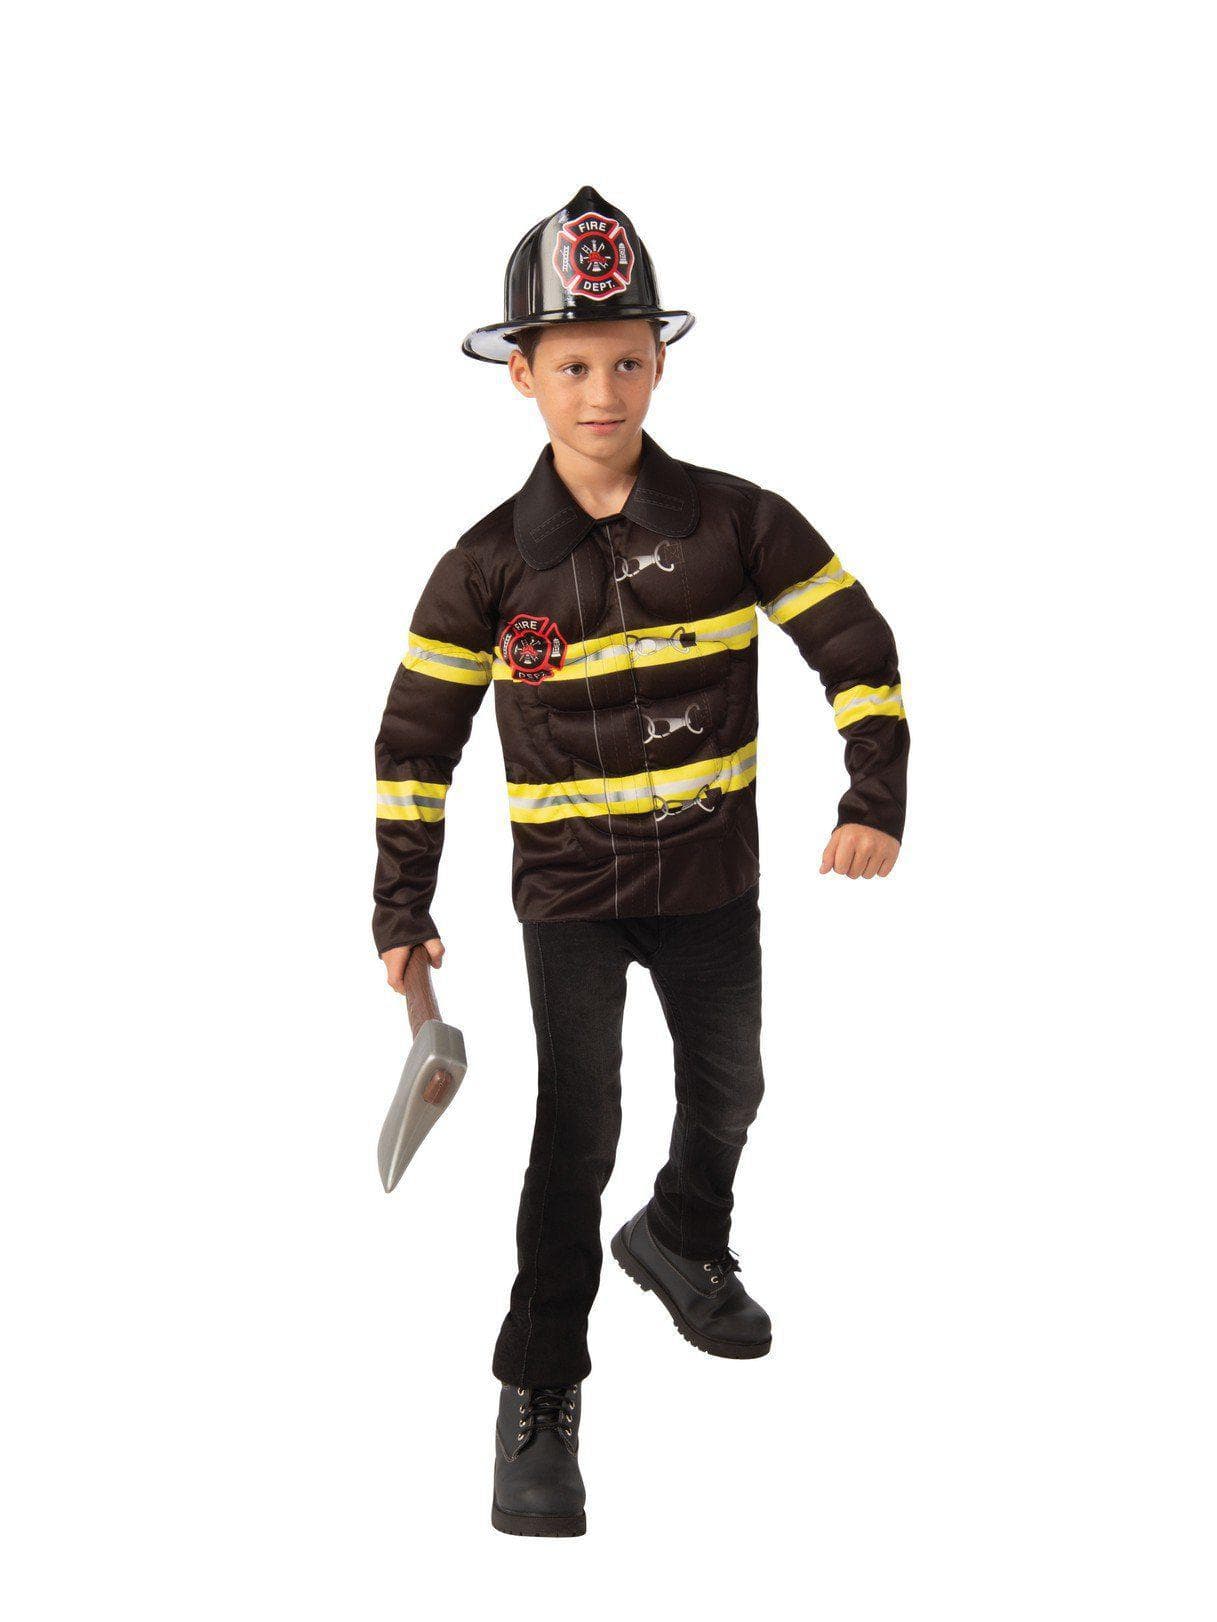 Kids Fireman Costume - costumes.com